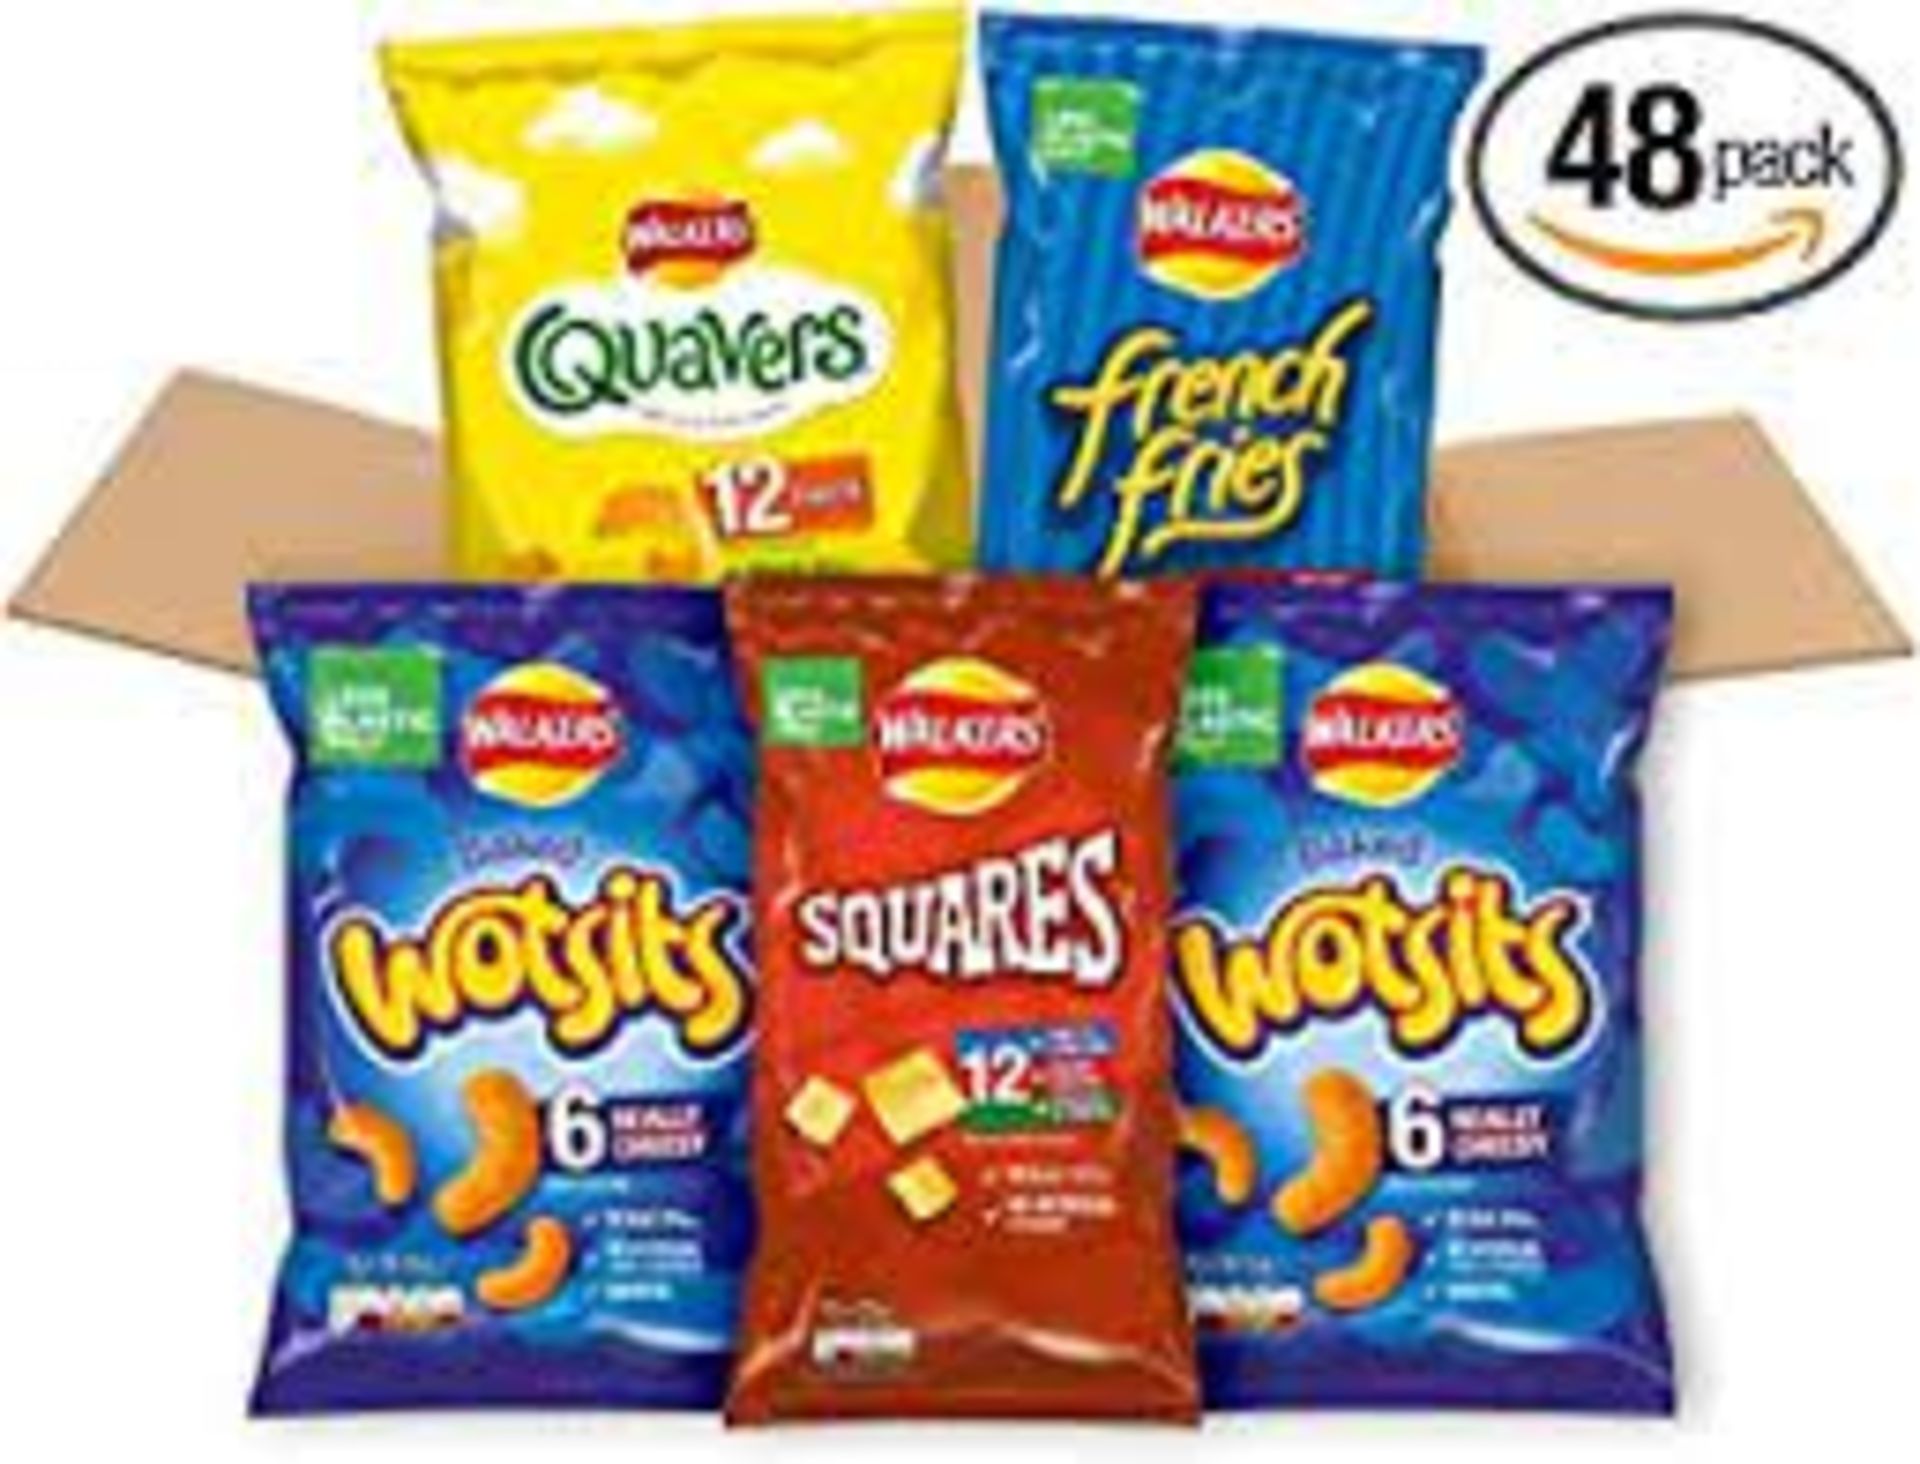 RRP £636 (Approx. Count 47) spSQL11TNdf 41 x Walkers Under 100 Calories Crisps Snack Box | Wotsits |